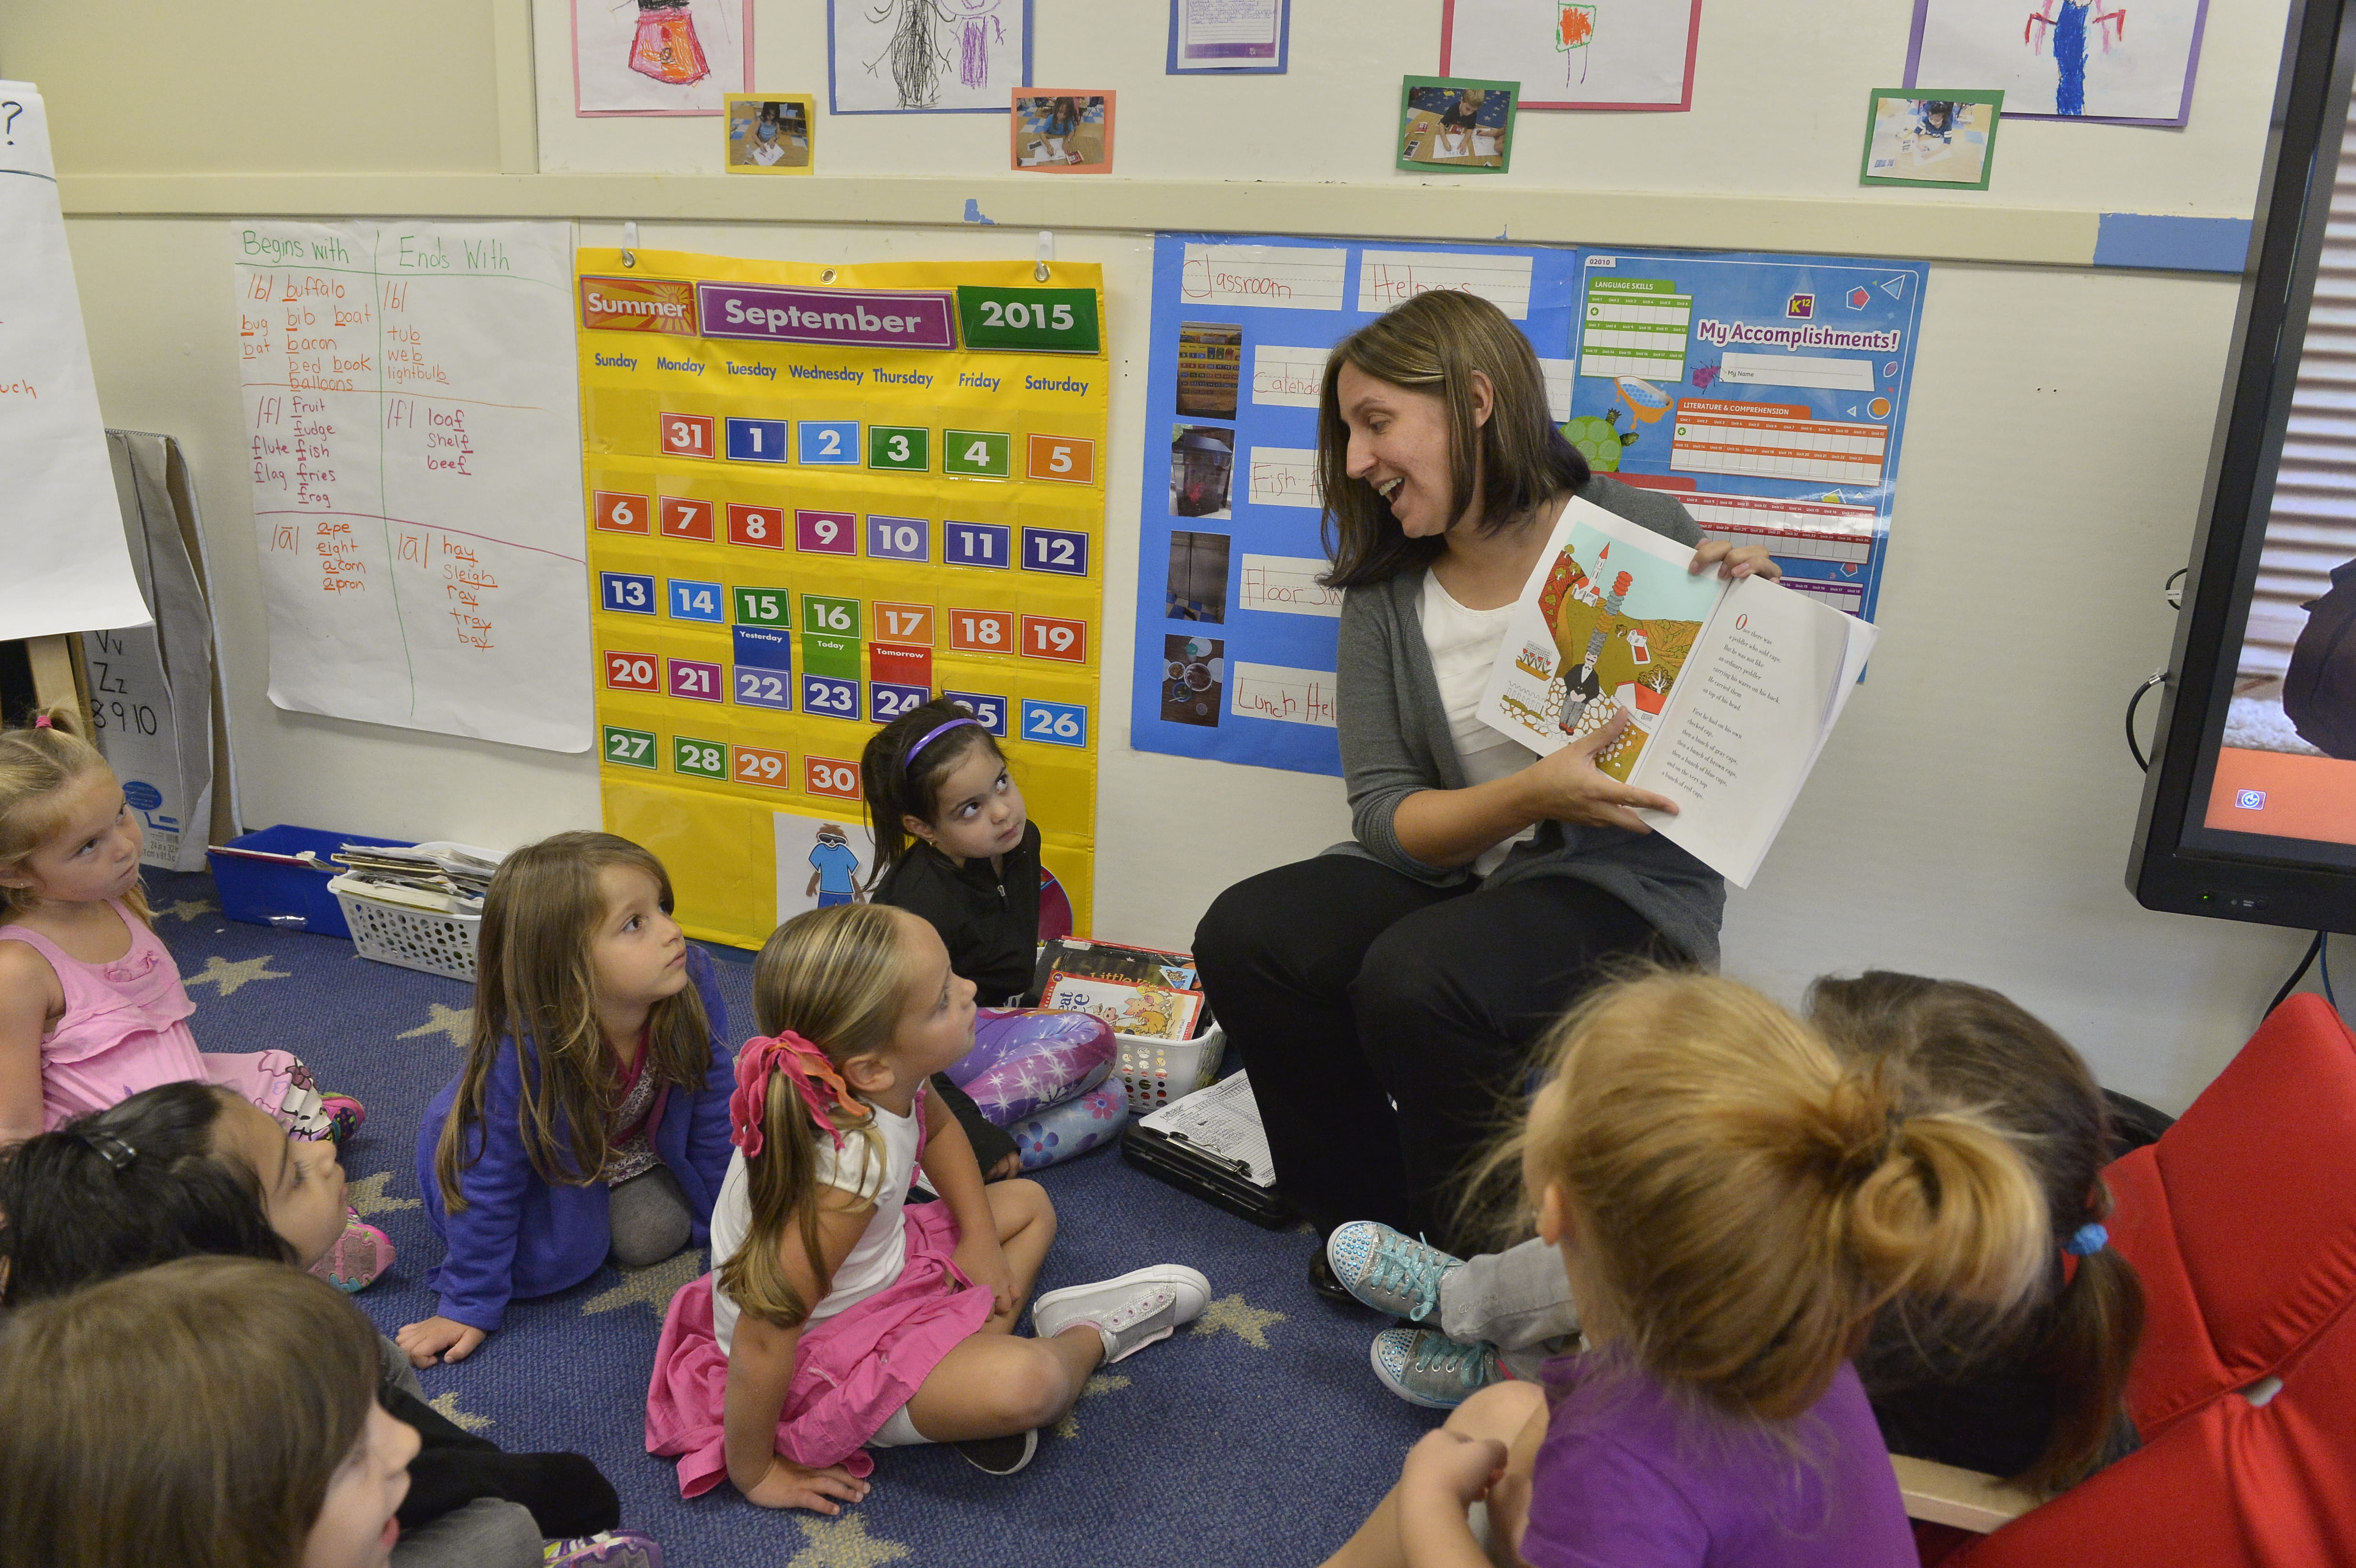 Award-winning teacher Kim Bouchie believes in hands-on learning experiences for children.